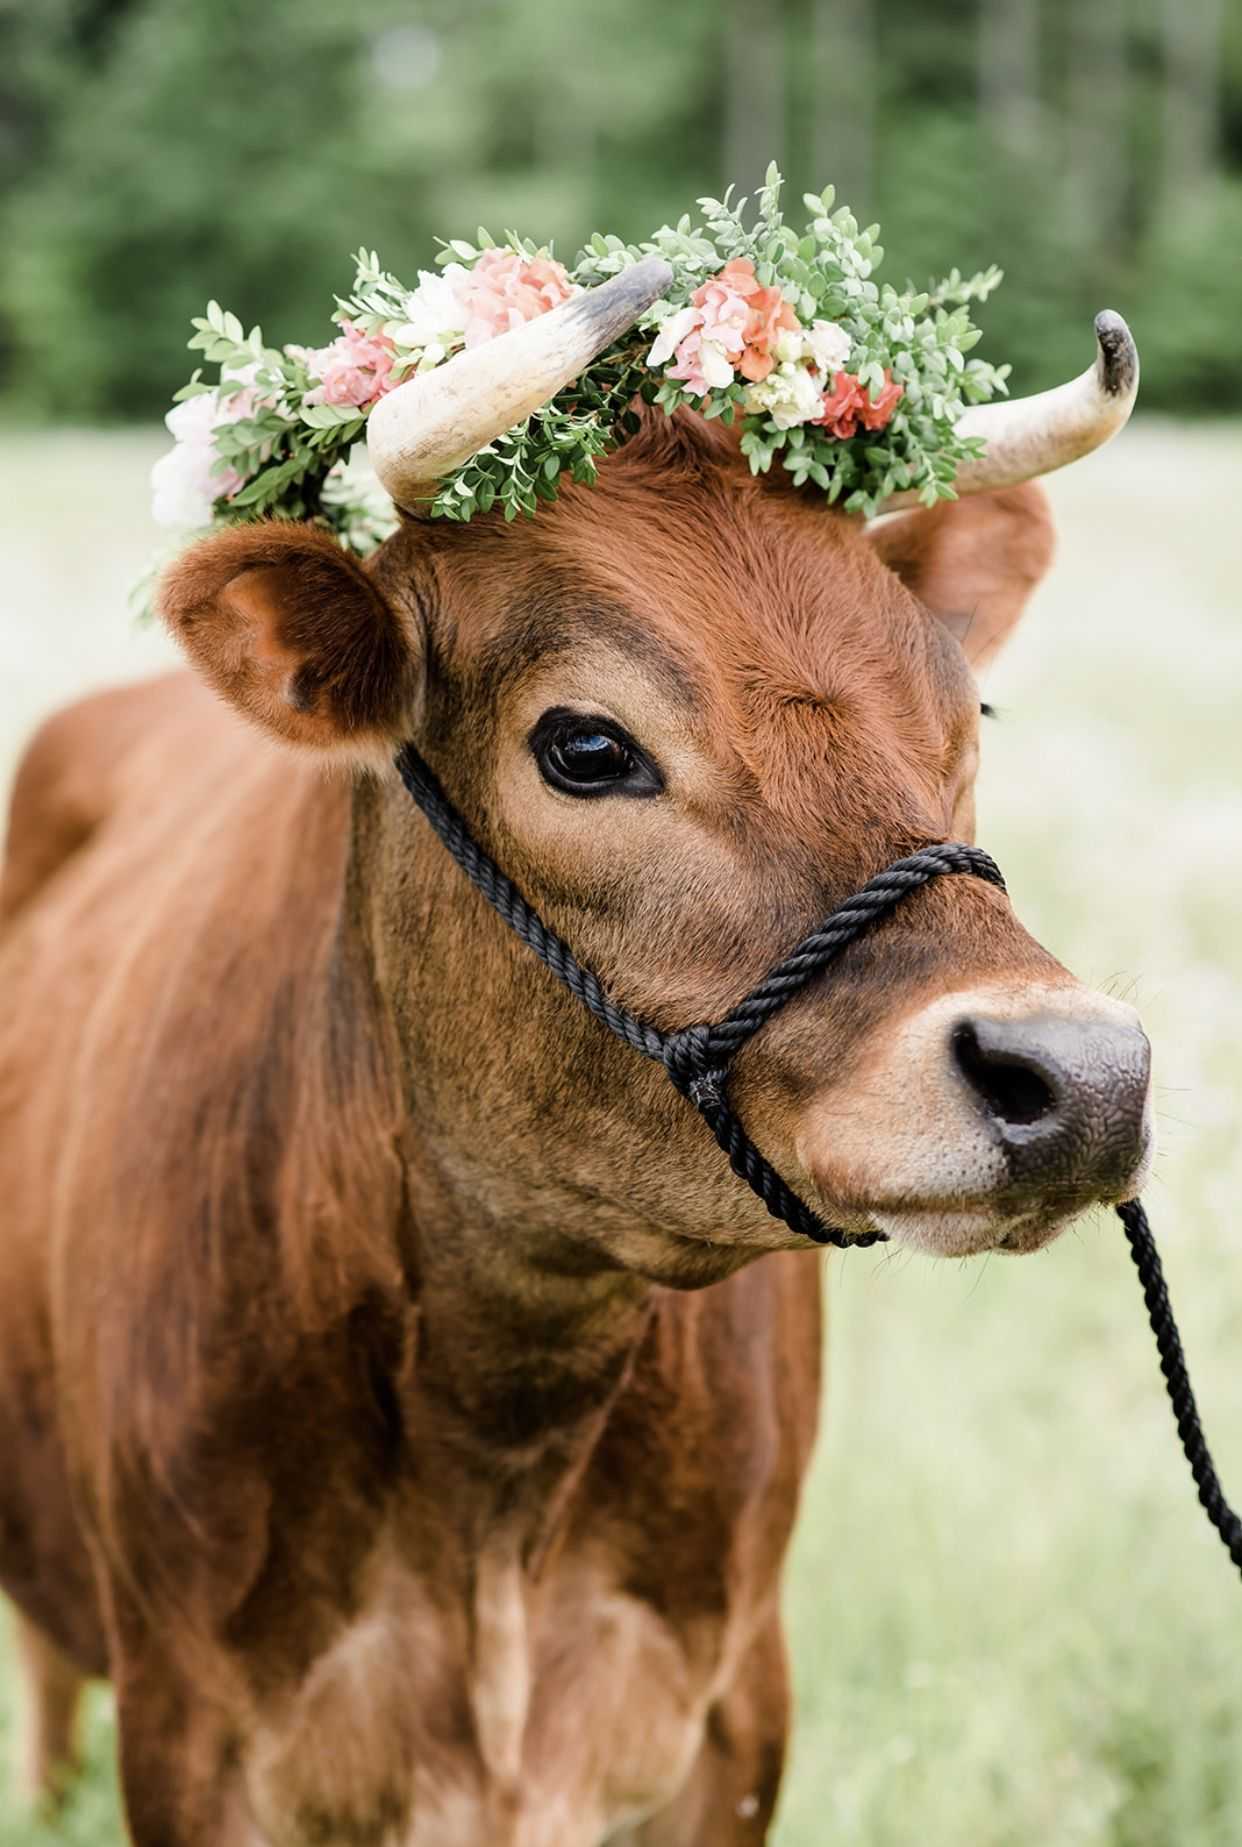 HD wallpaper cow allgäu cows cute ruminant dairy cattle pasture  animal  Wallpaper Flare